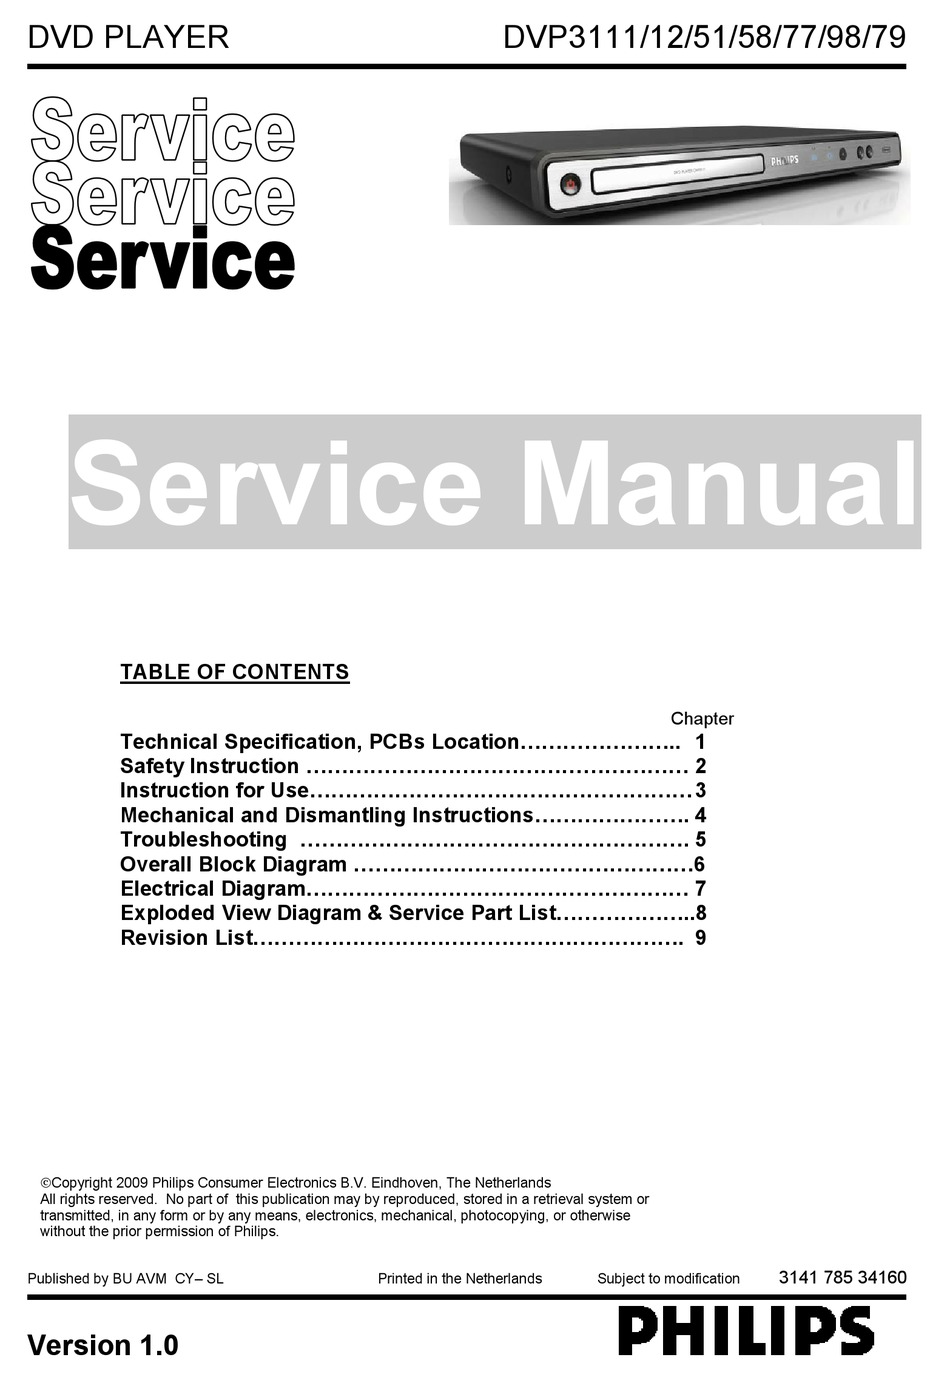 Service manual philips. Philips dvp3111. Дивиди плеер Philips.инструкция. Меню двд плеер Филипс. DVD-плеер Philips dvp3266k.